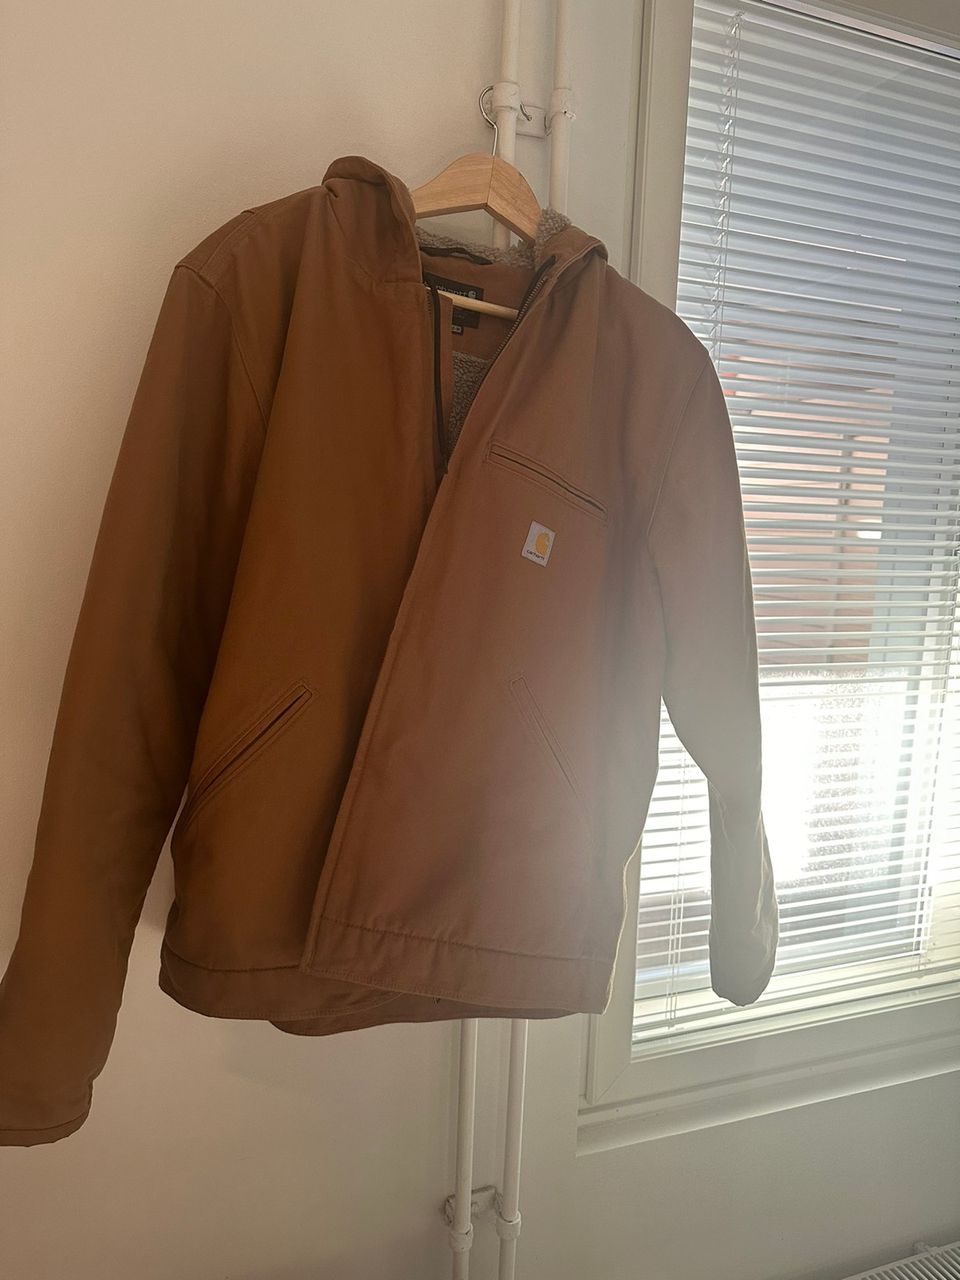 Carhartt sherpa lined jacket